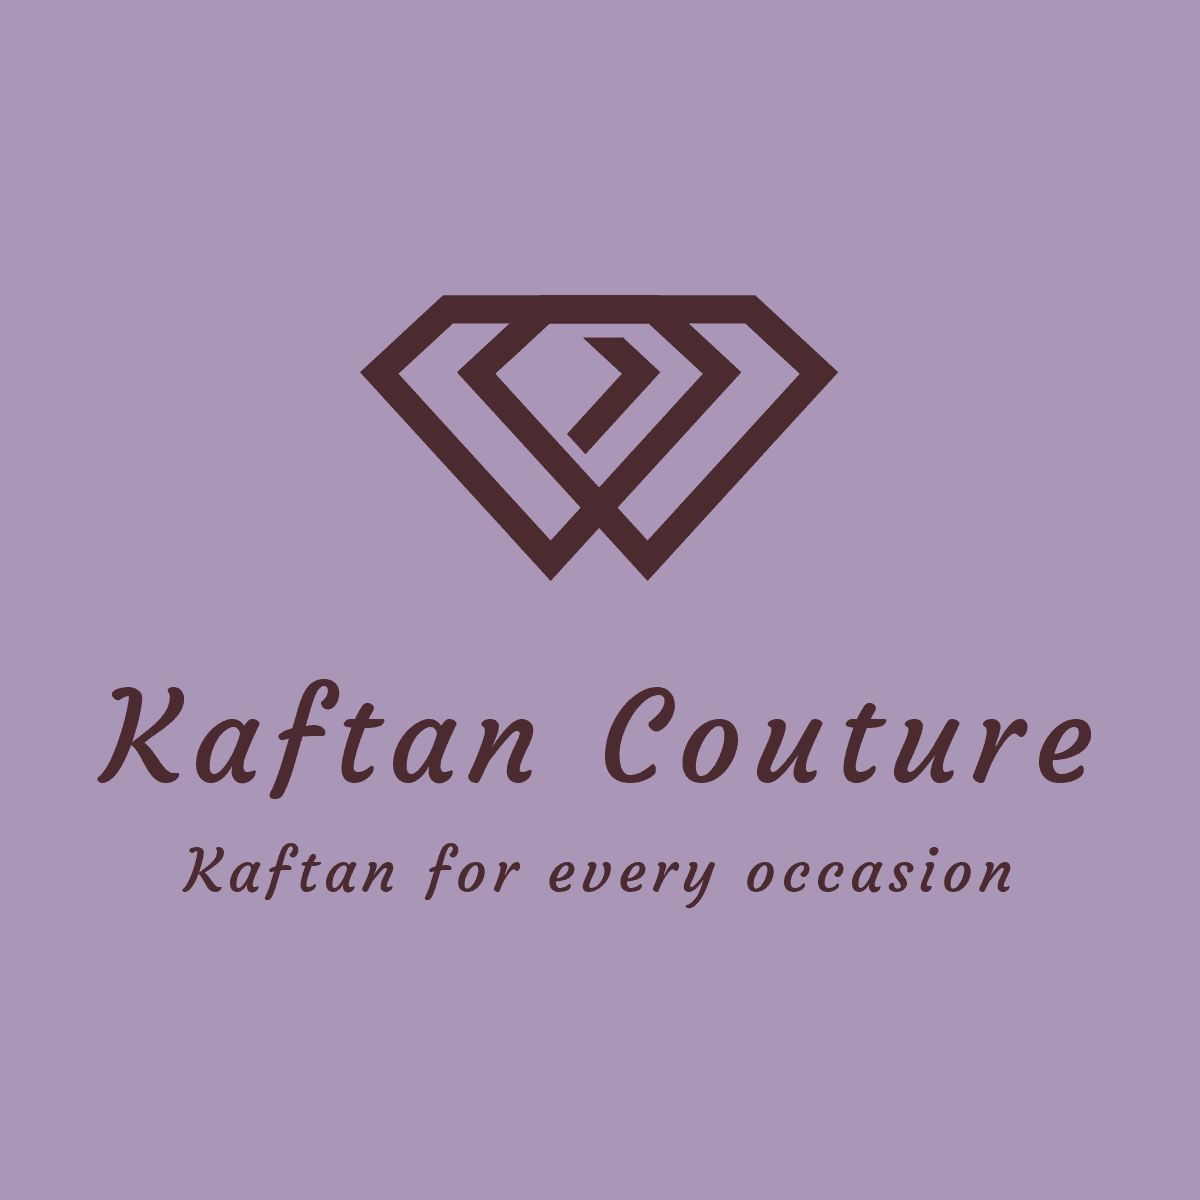 kaftan couture ltd logo